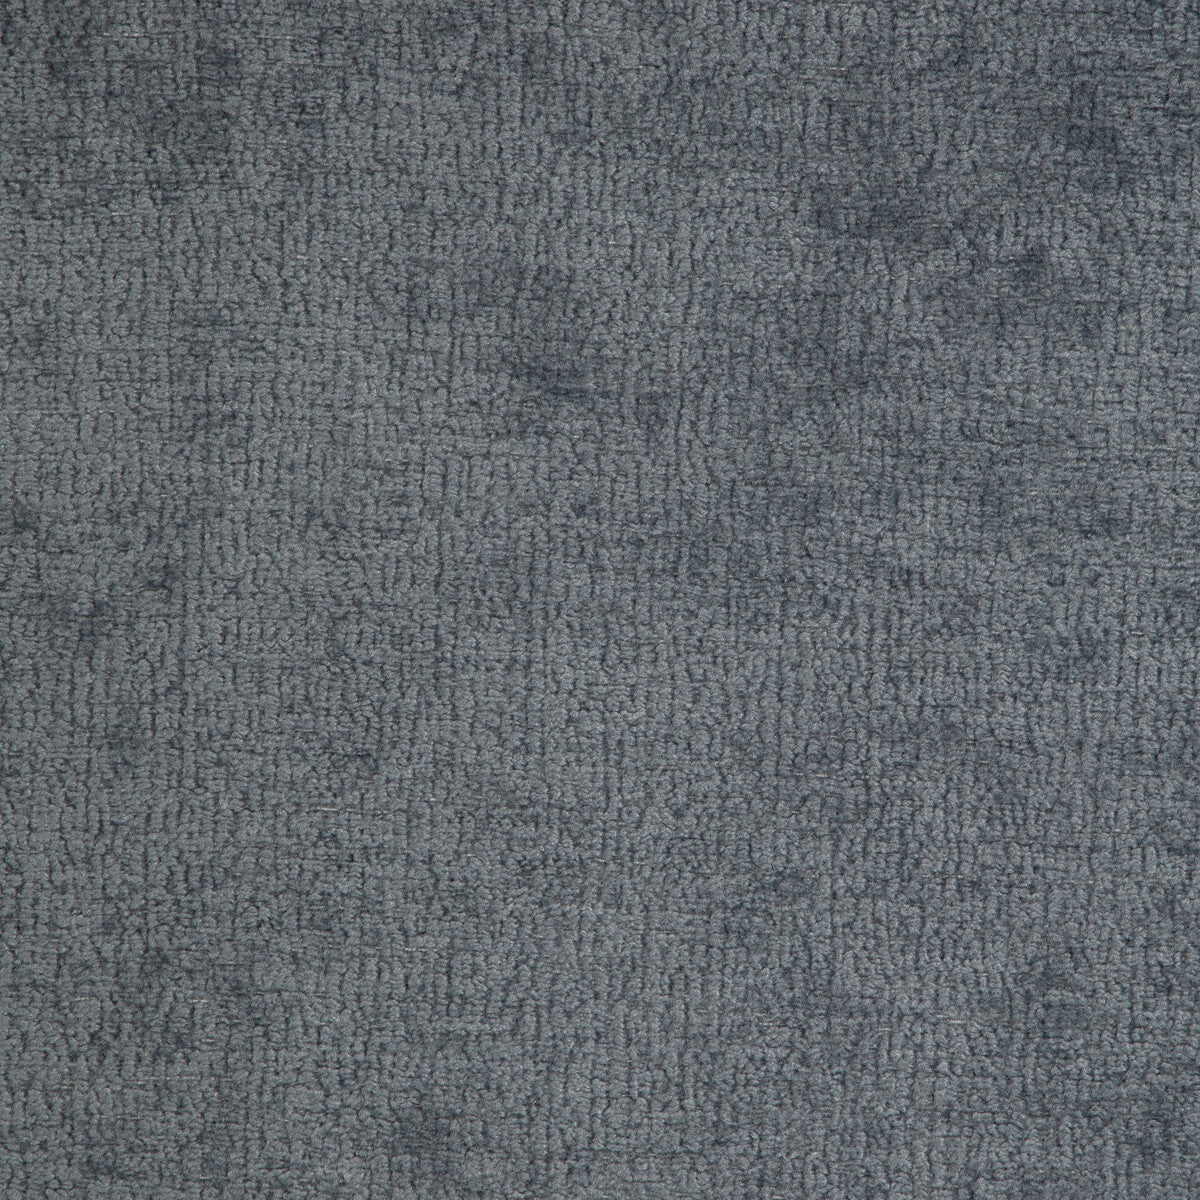 Kravet Smart fabric in 36985-52 color - pattern 36985.52.0 - by Kravet Smart